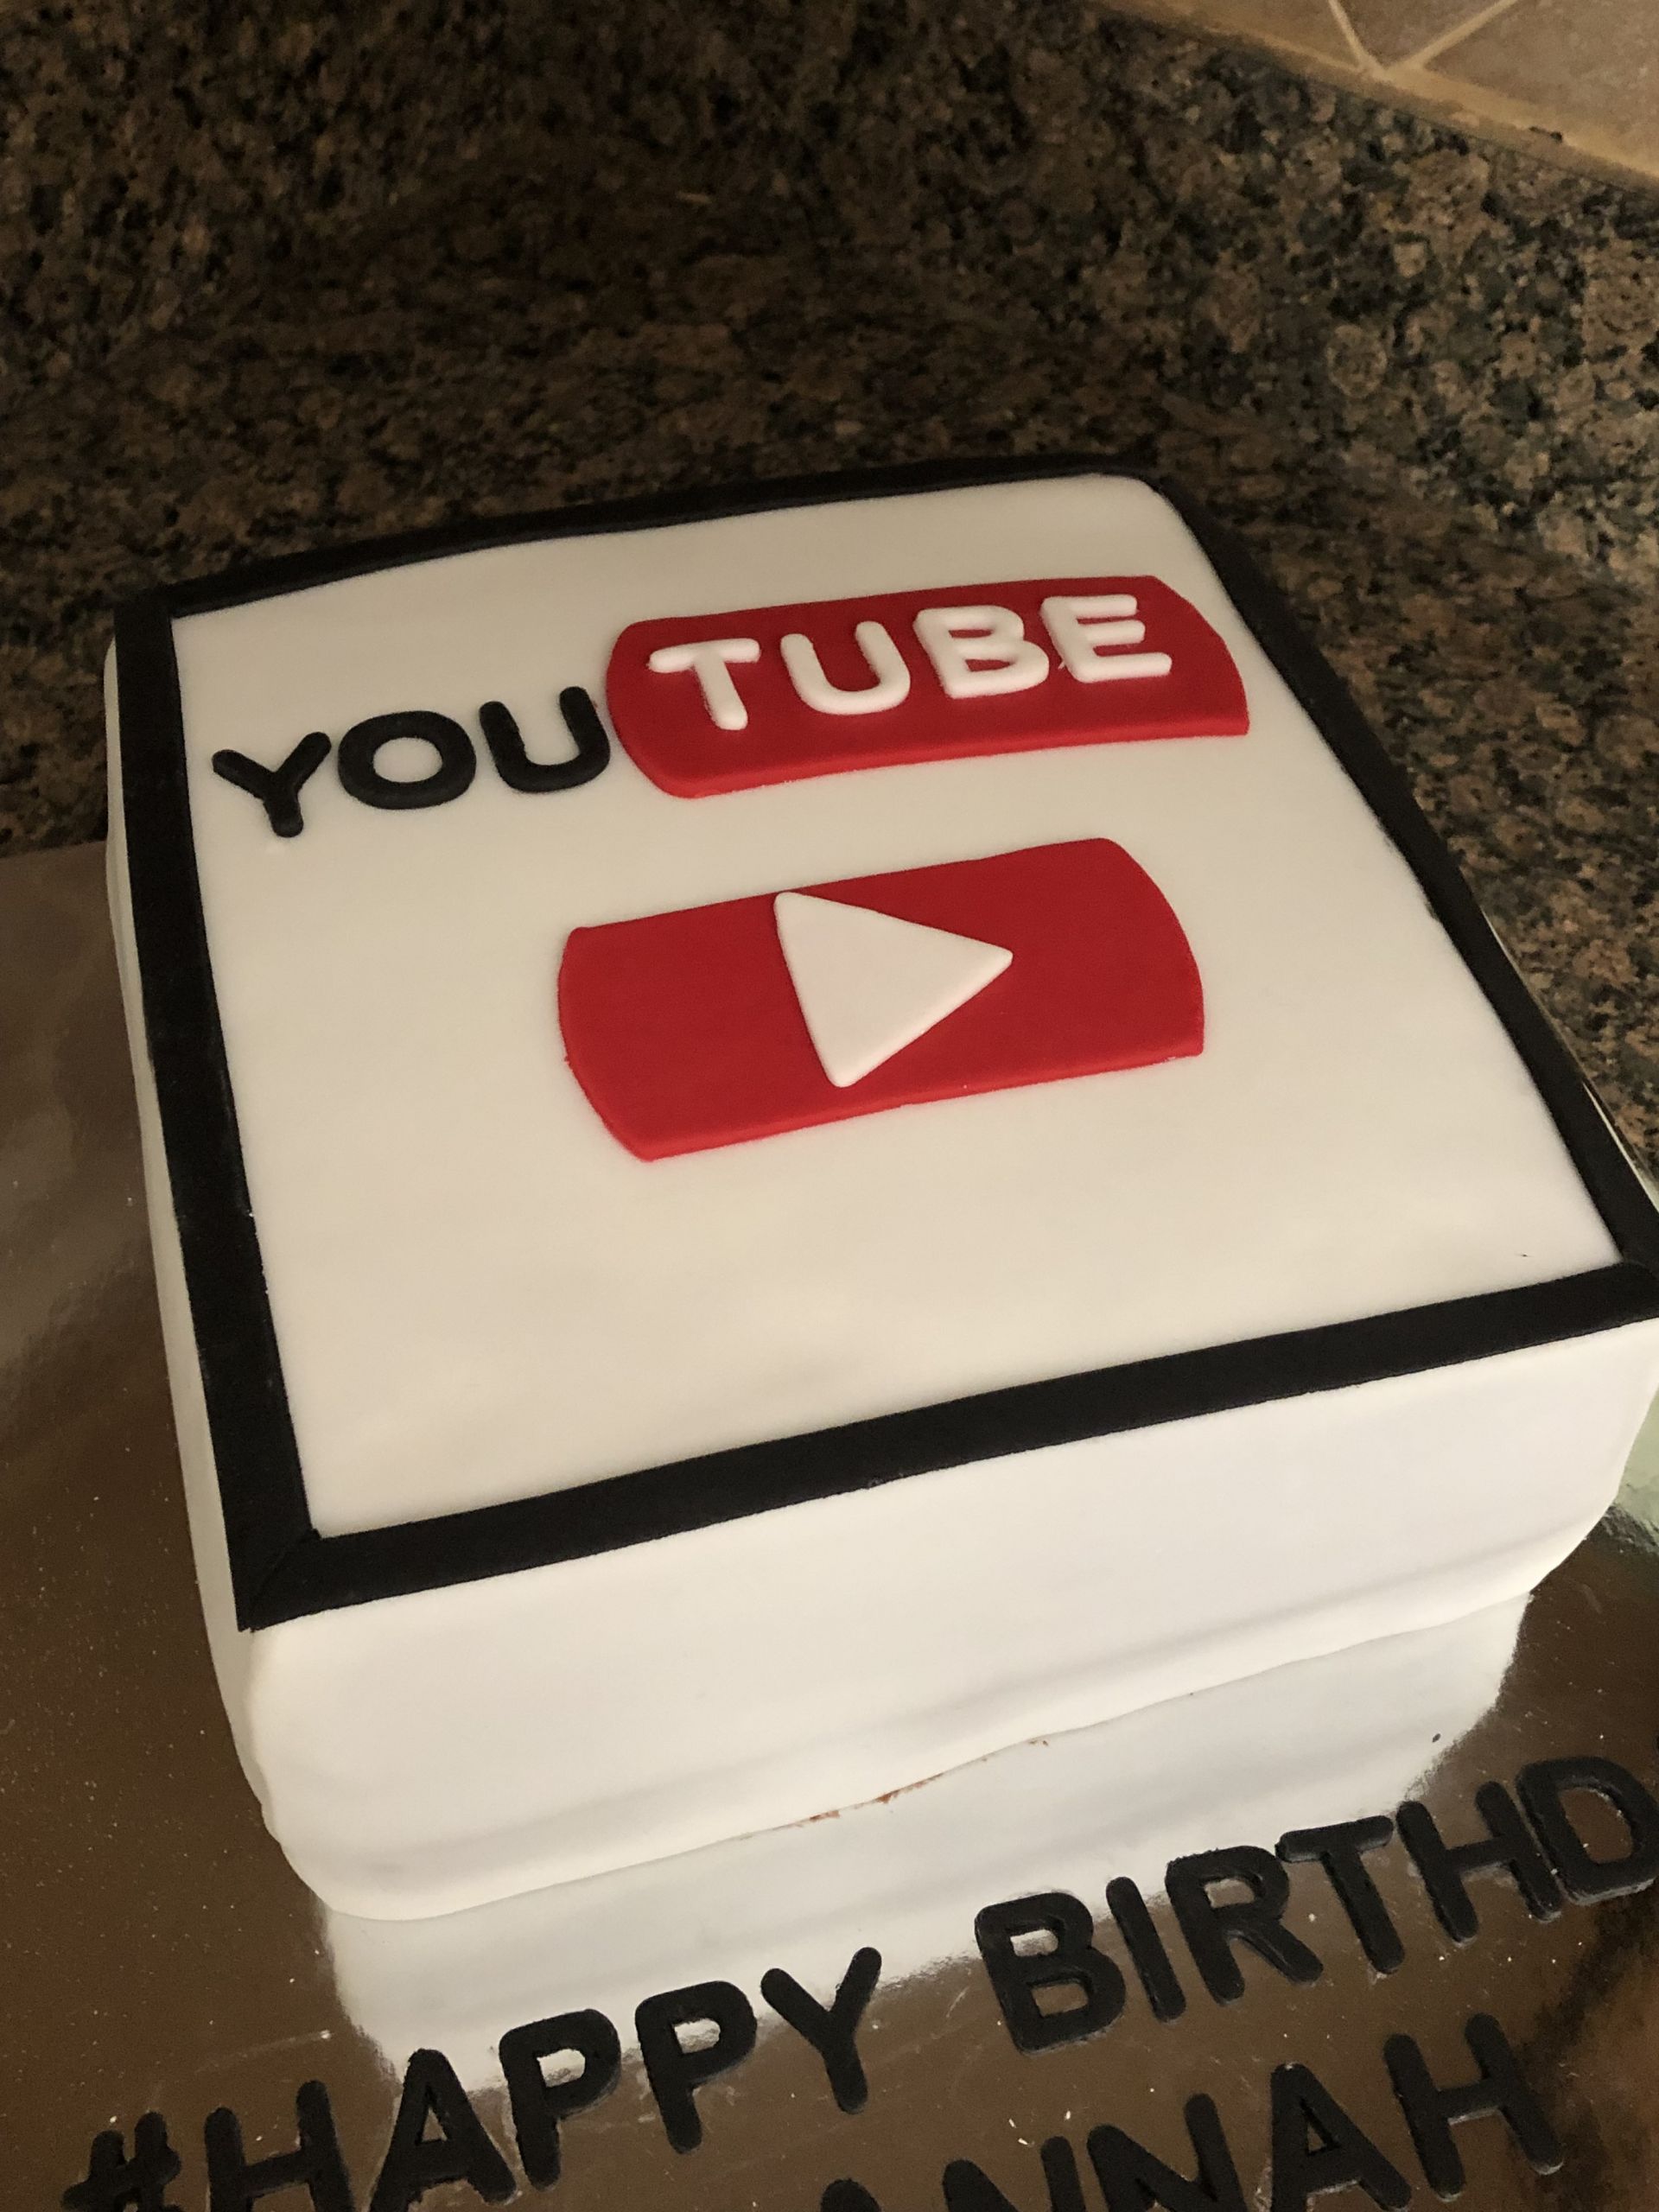 Youtube Birthday Cake
 Themed Cake